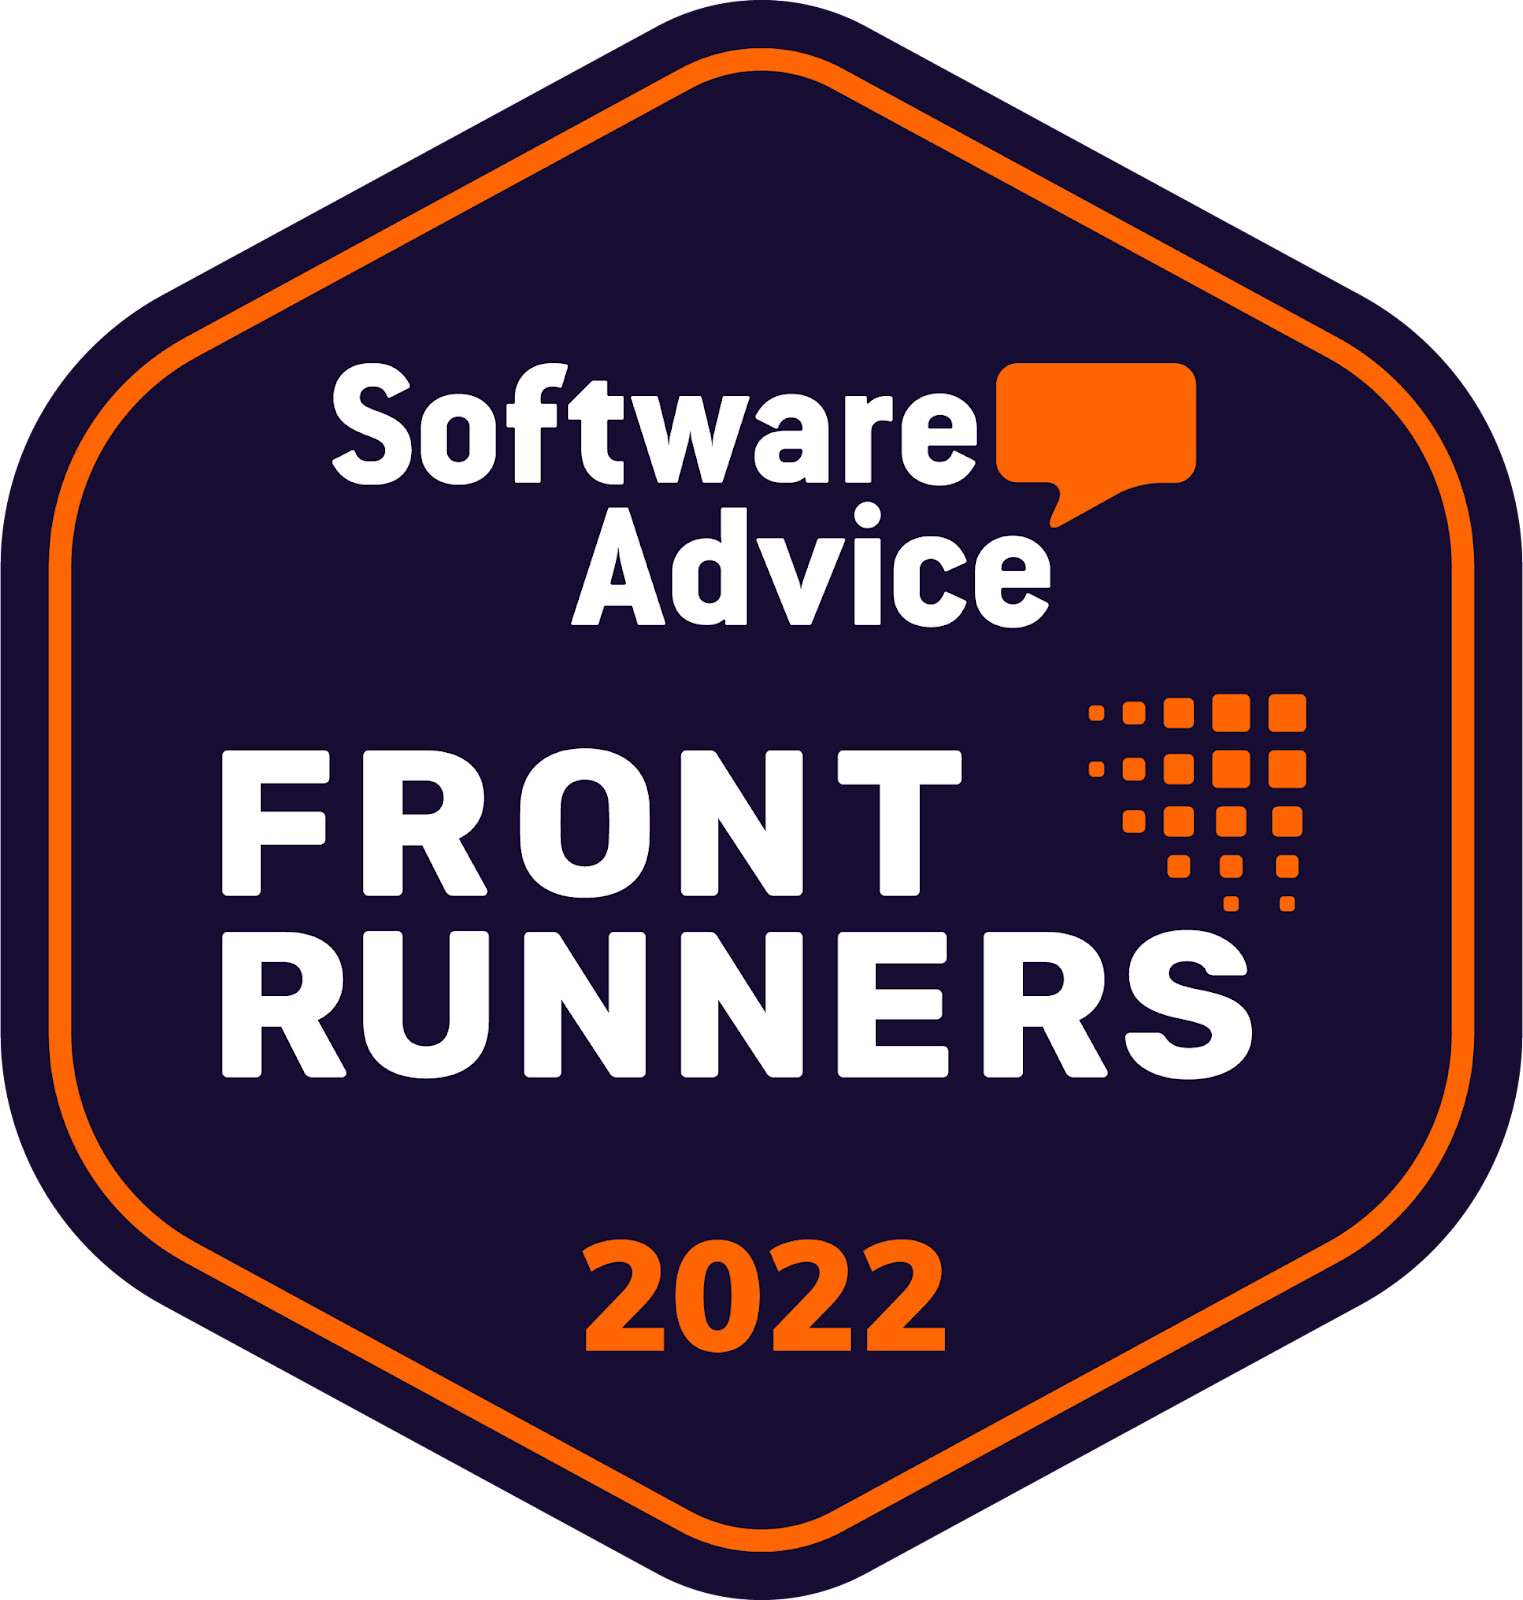 Software Advice FrontRunners 2022 - Gartner Awards